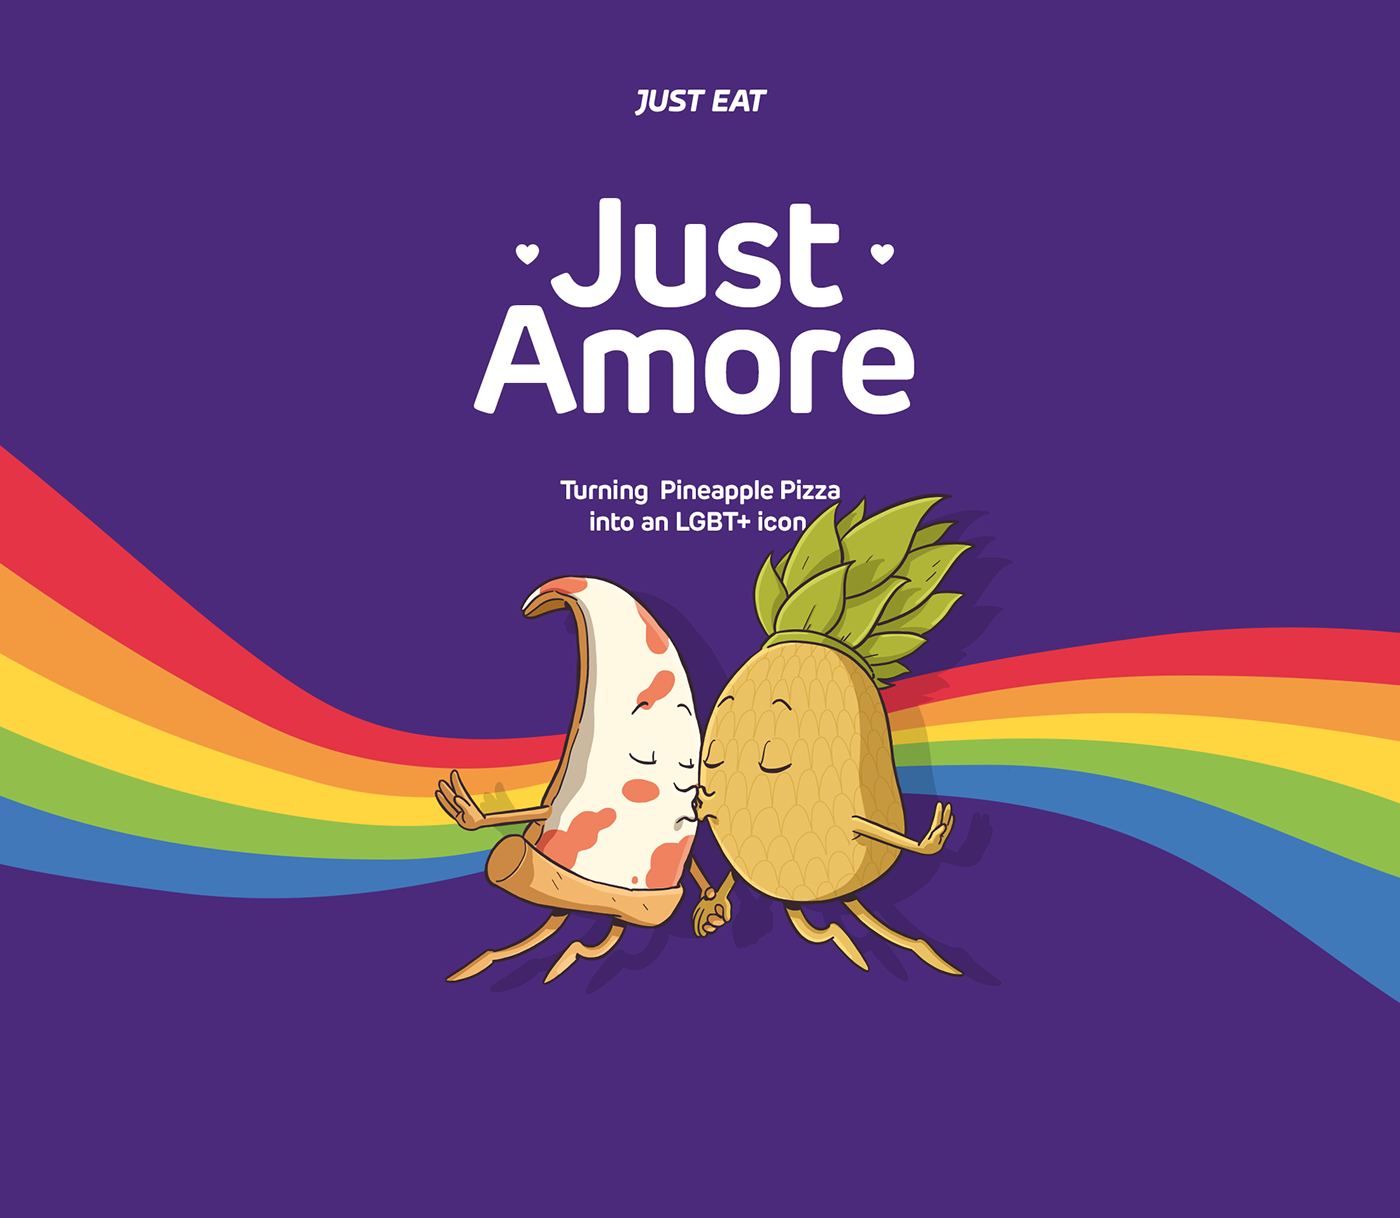 animation  campaign colors illustrations LGBT pride Love pizza&pineapple prejudice